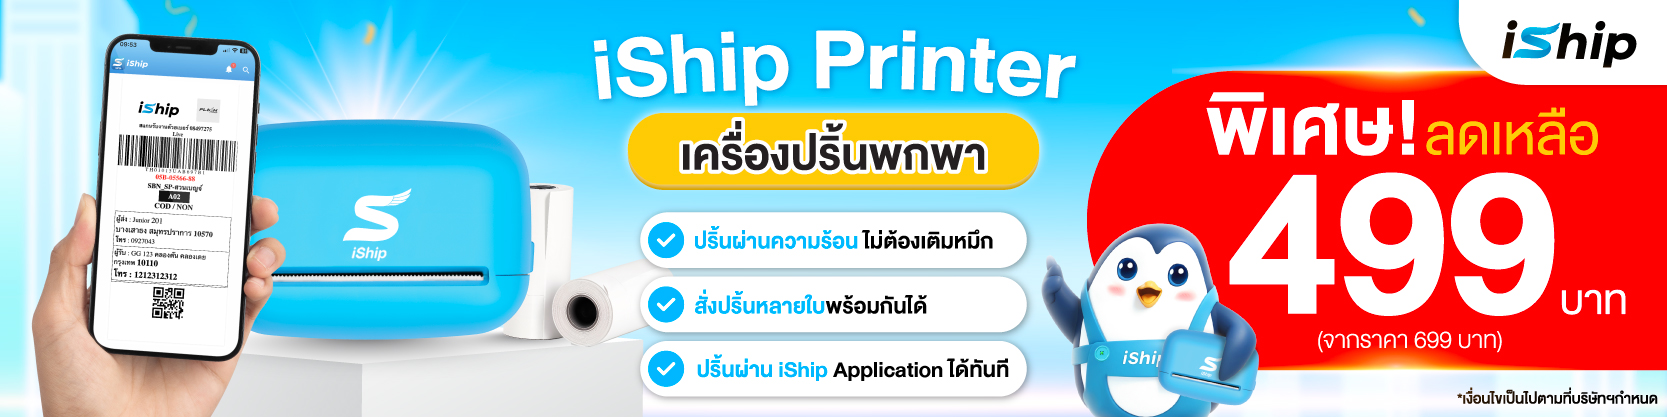 iship-printer